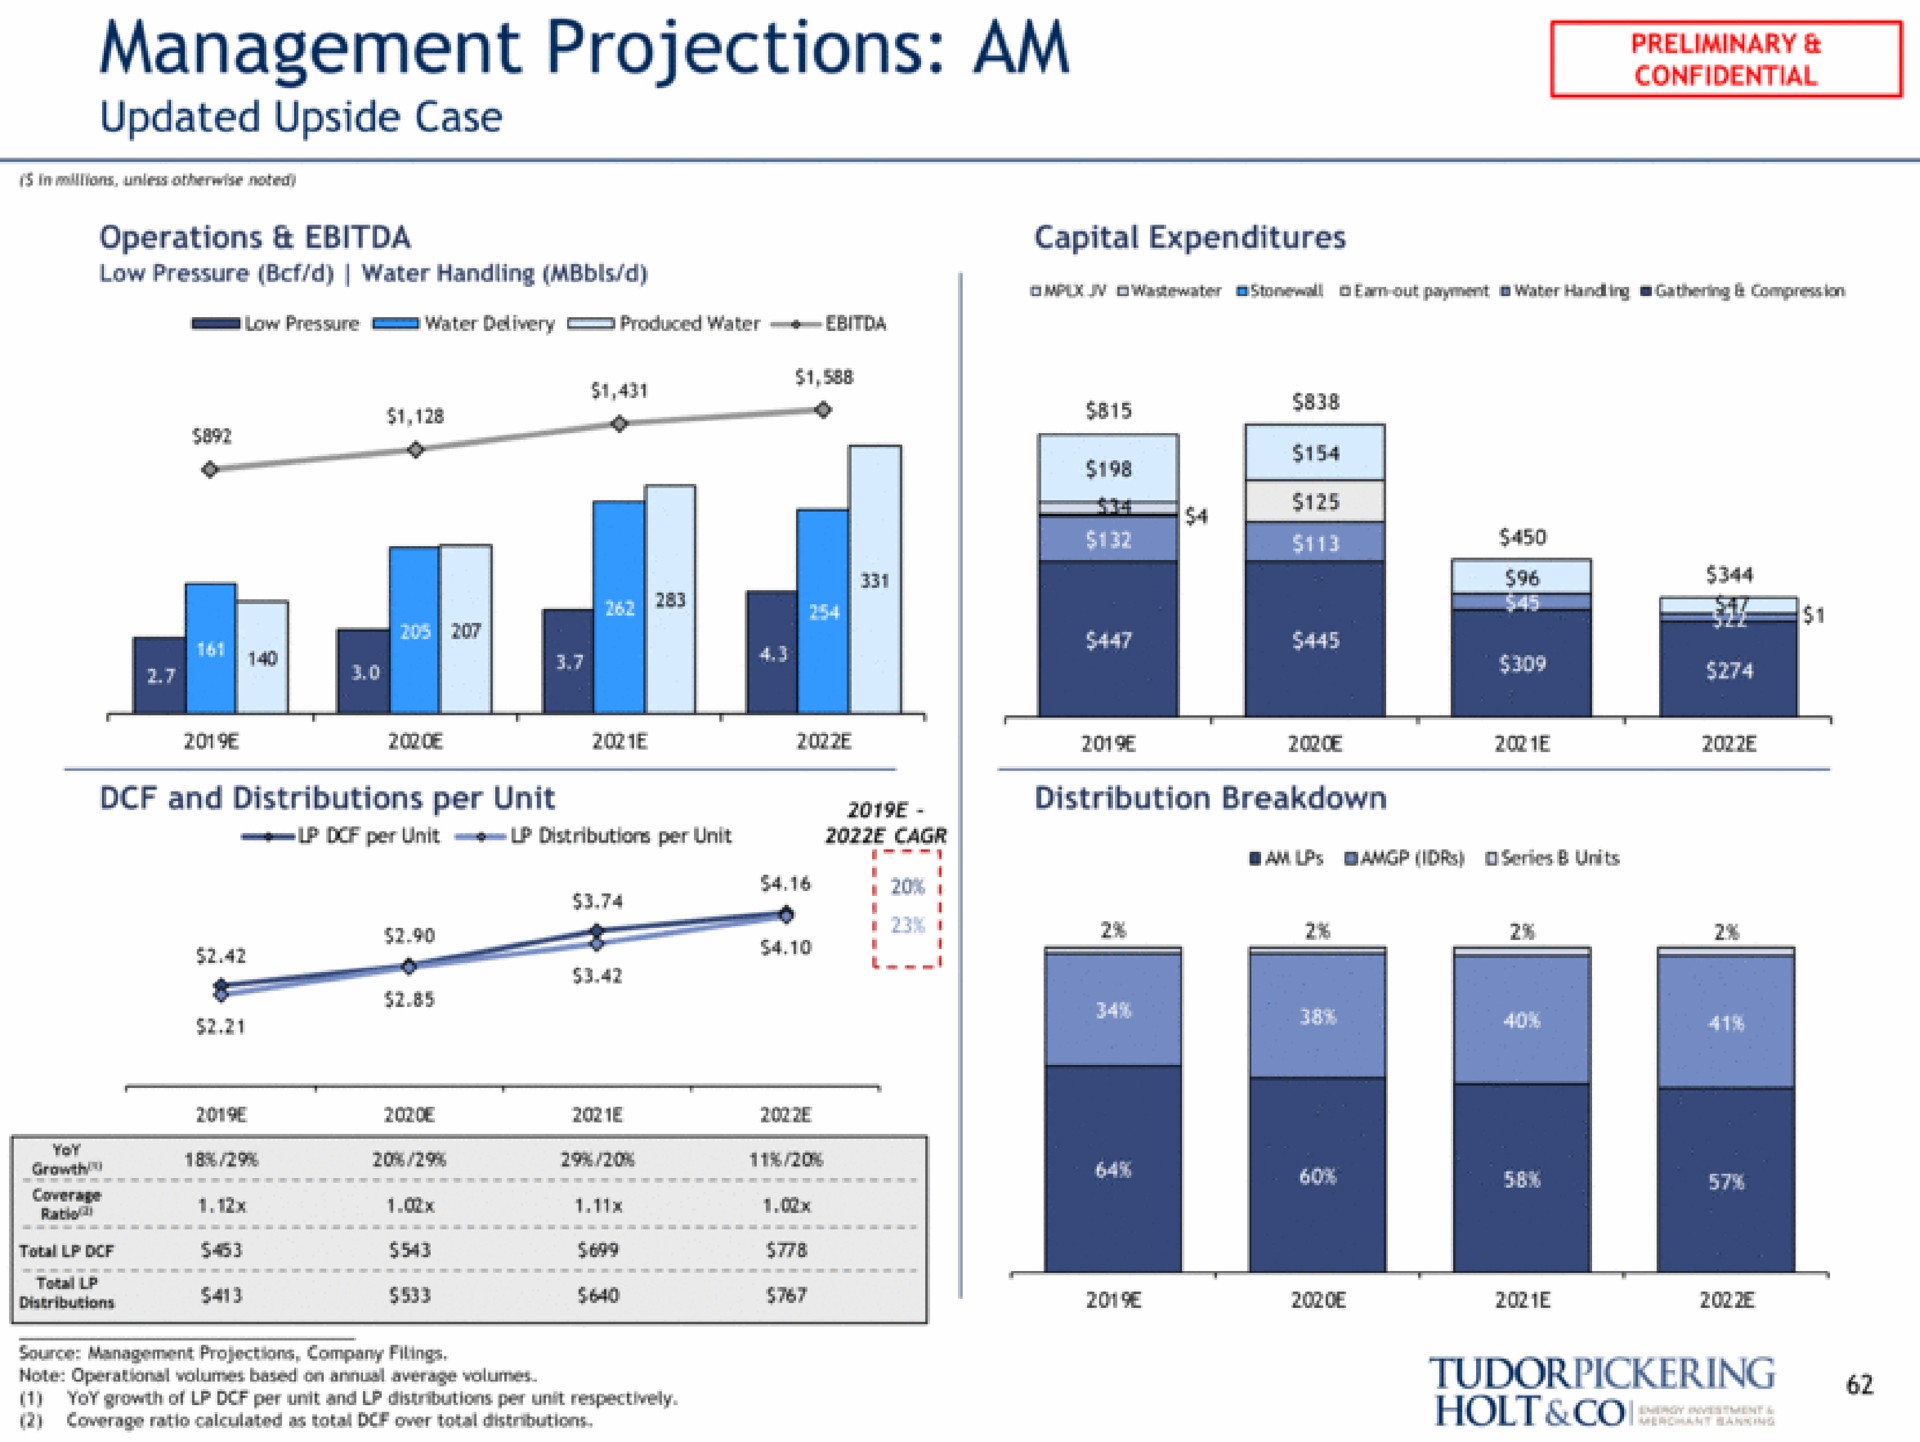 management projections updated upside case am holt | Tudor, Pickering, Holt & Co